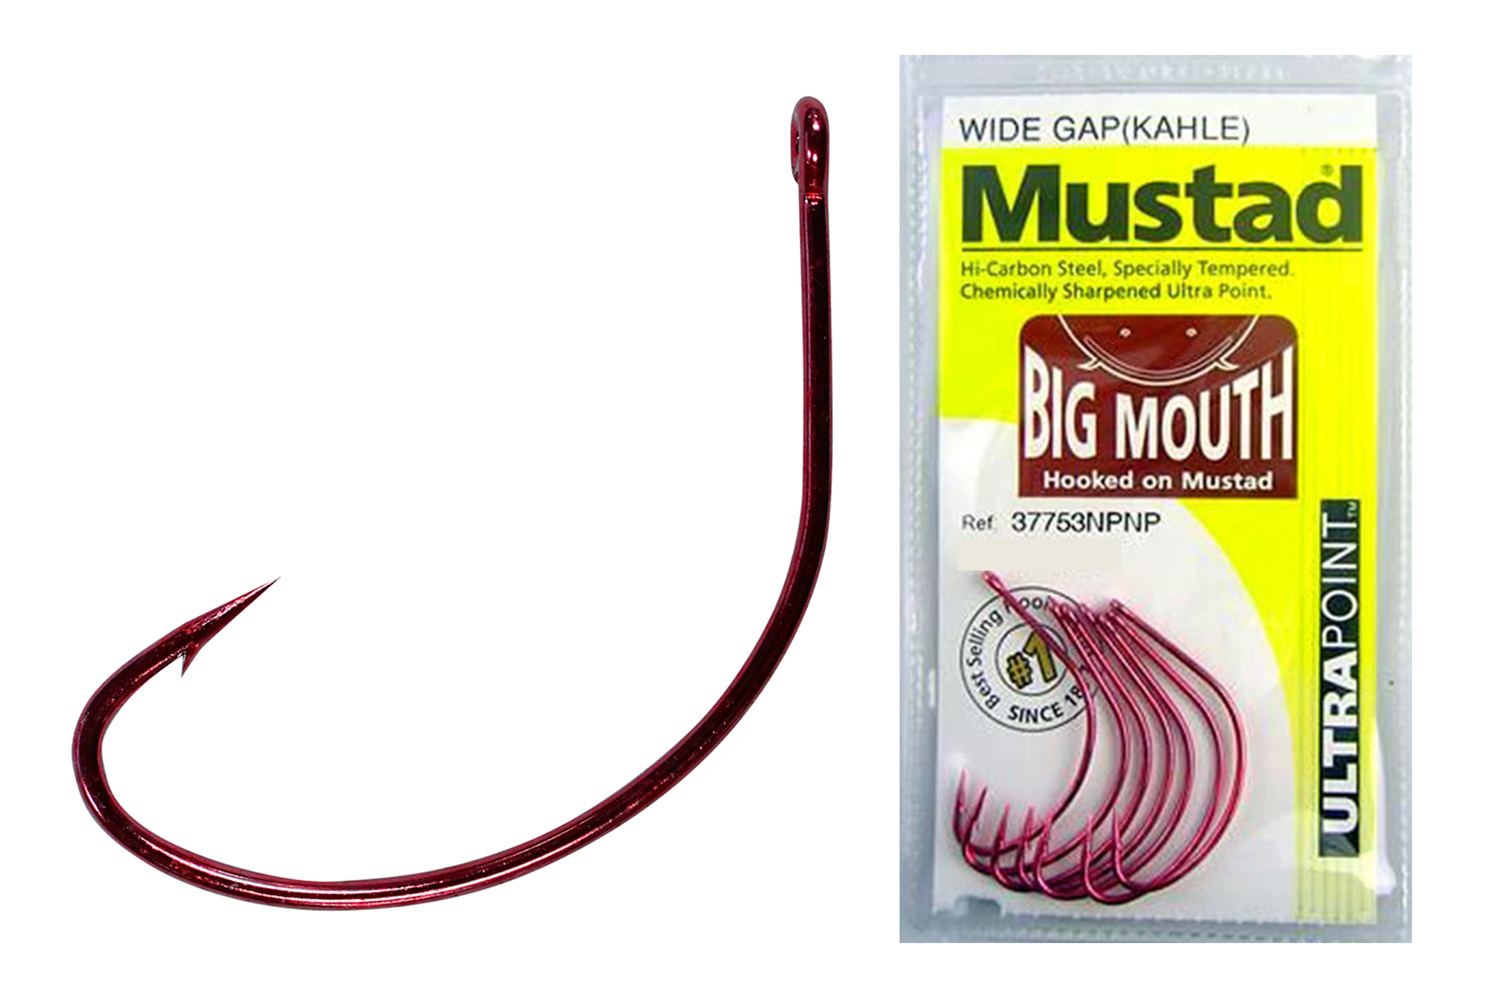 1 Packet of Mustad 37753NPNP Big Mouth Chemically Sharp Fishing Hooks